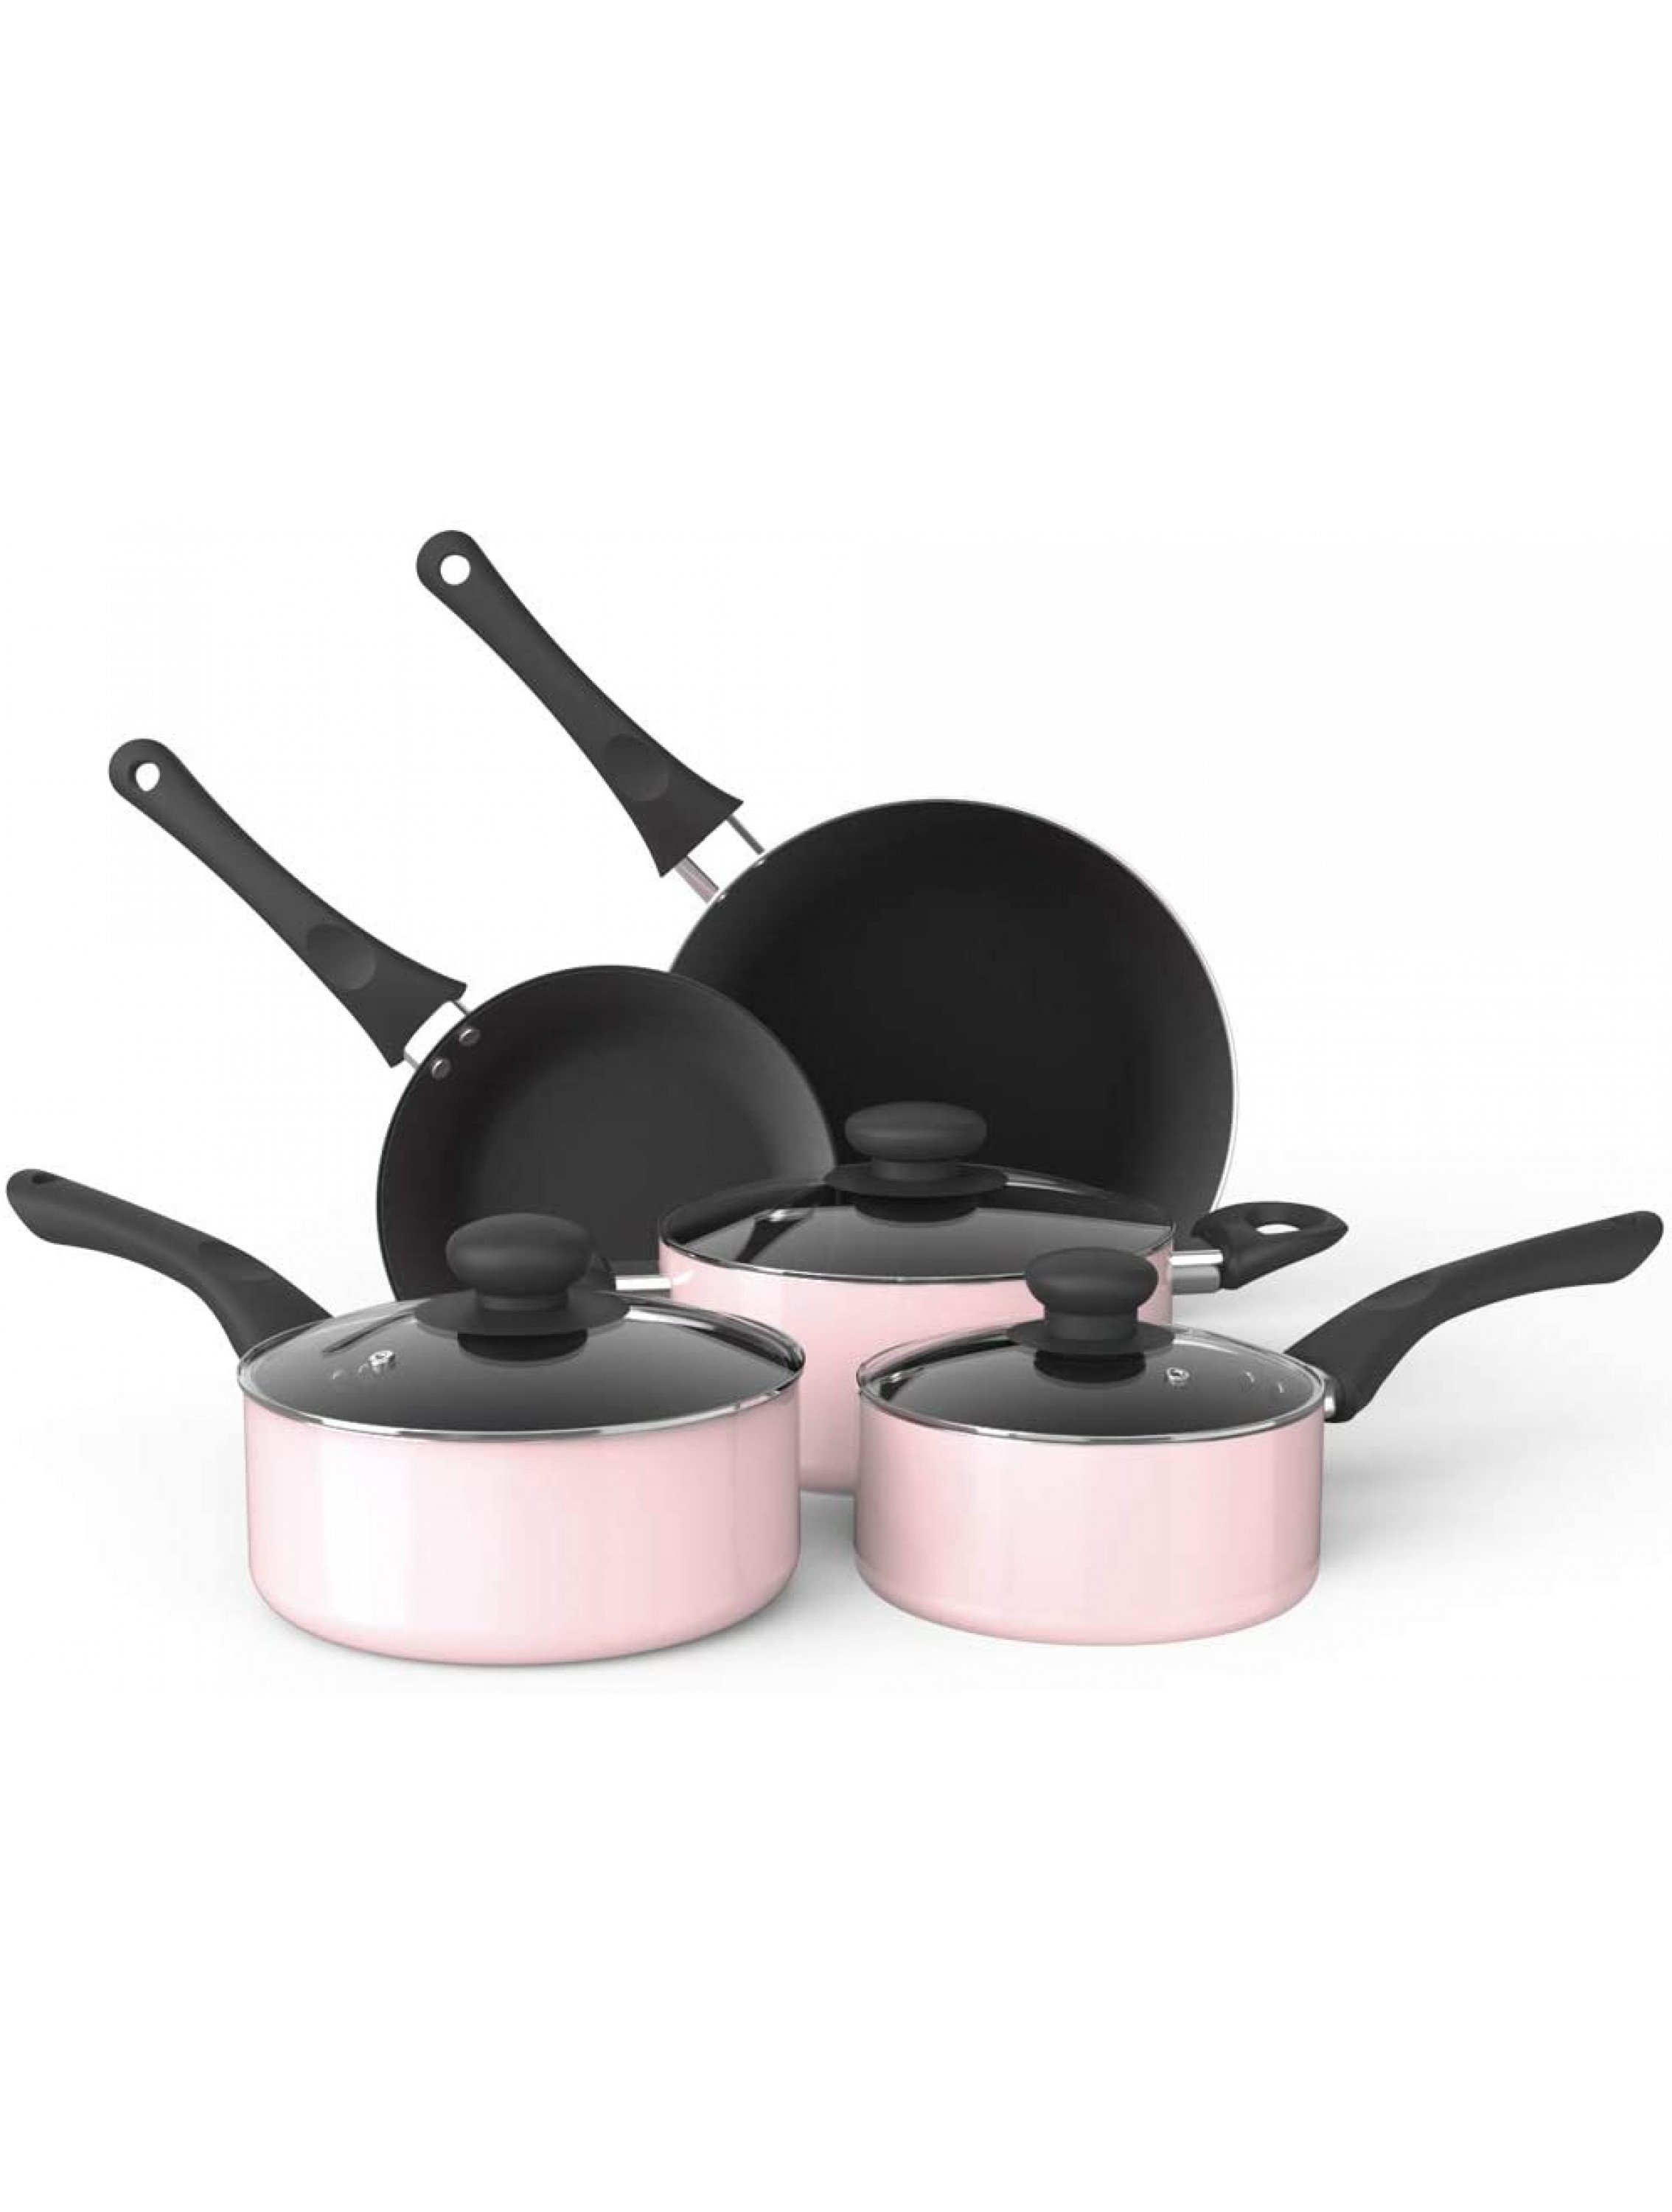 Aluminum Alloy Non-Stick Cookware Set Pots and Pans 8-Piece Set Light Pink - BNJUFHY9L